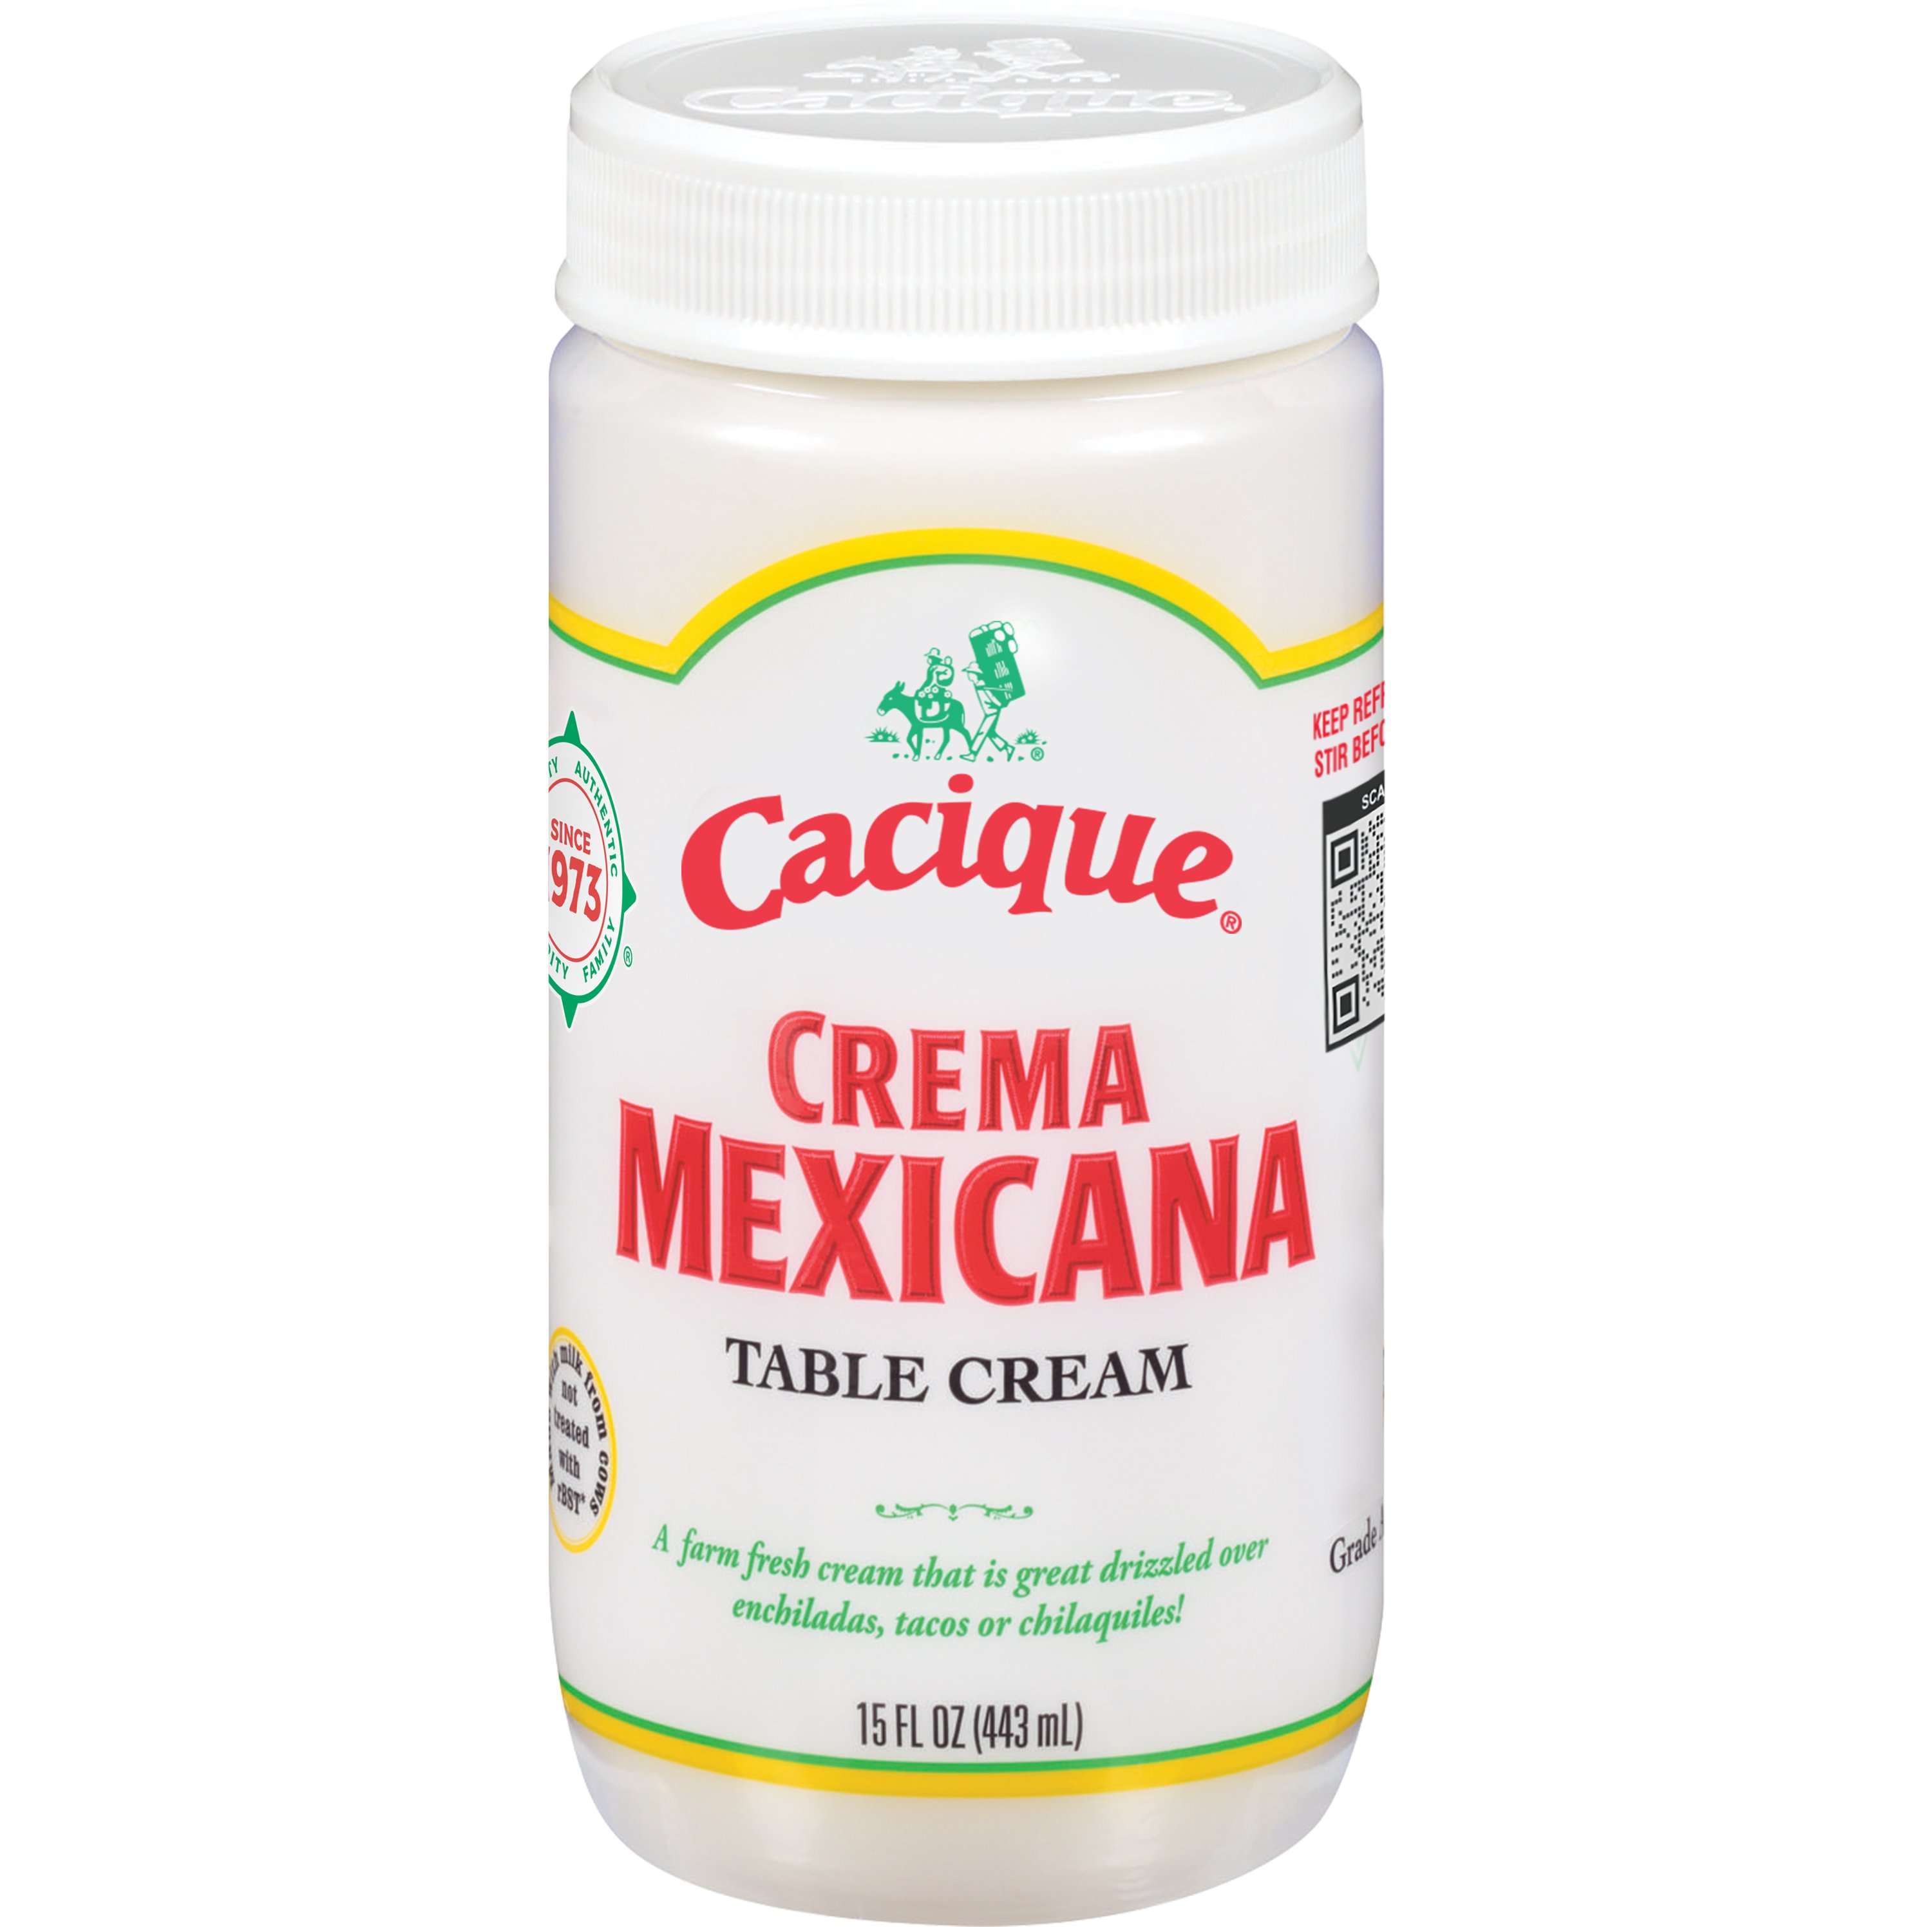 Cacique Crema Mexicana Table Cream - Shop Milk at H-E-B